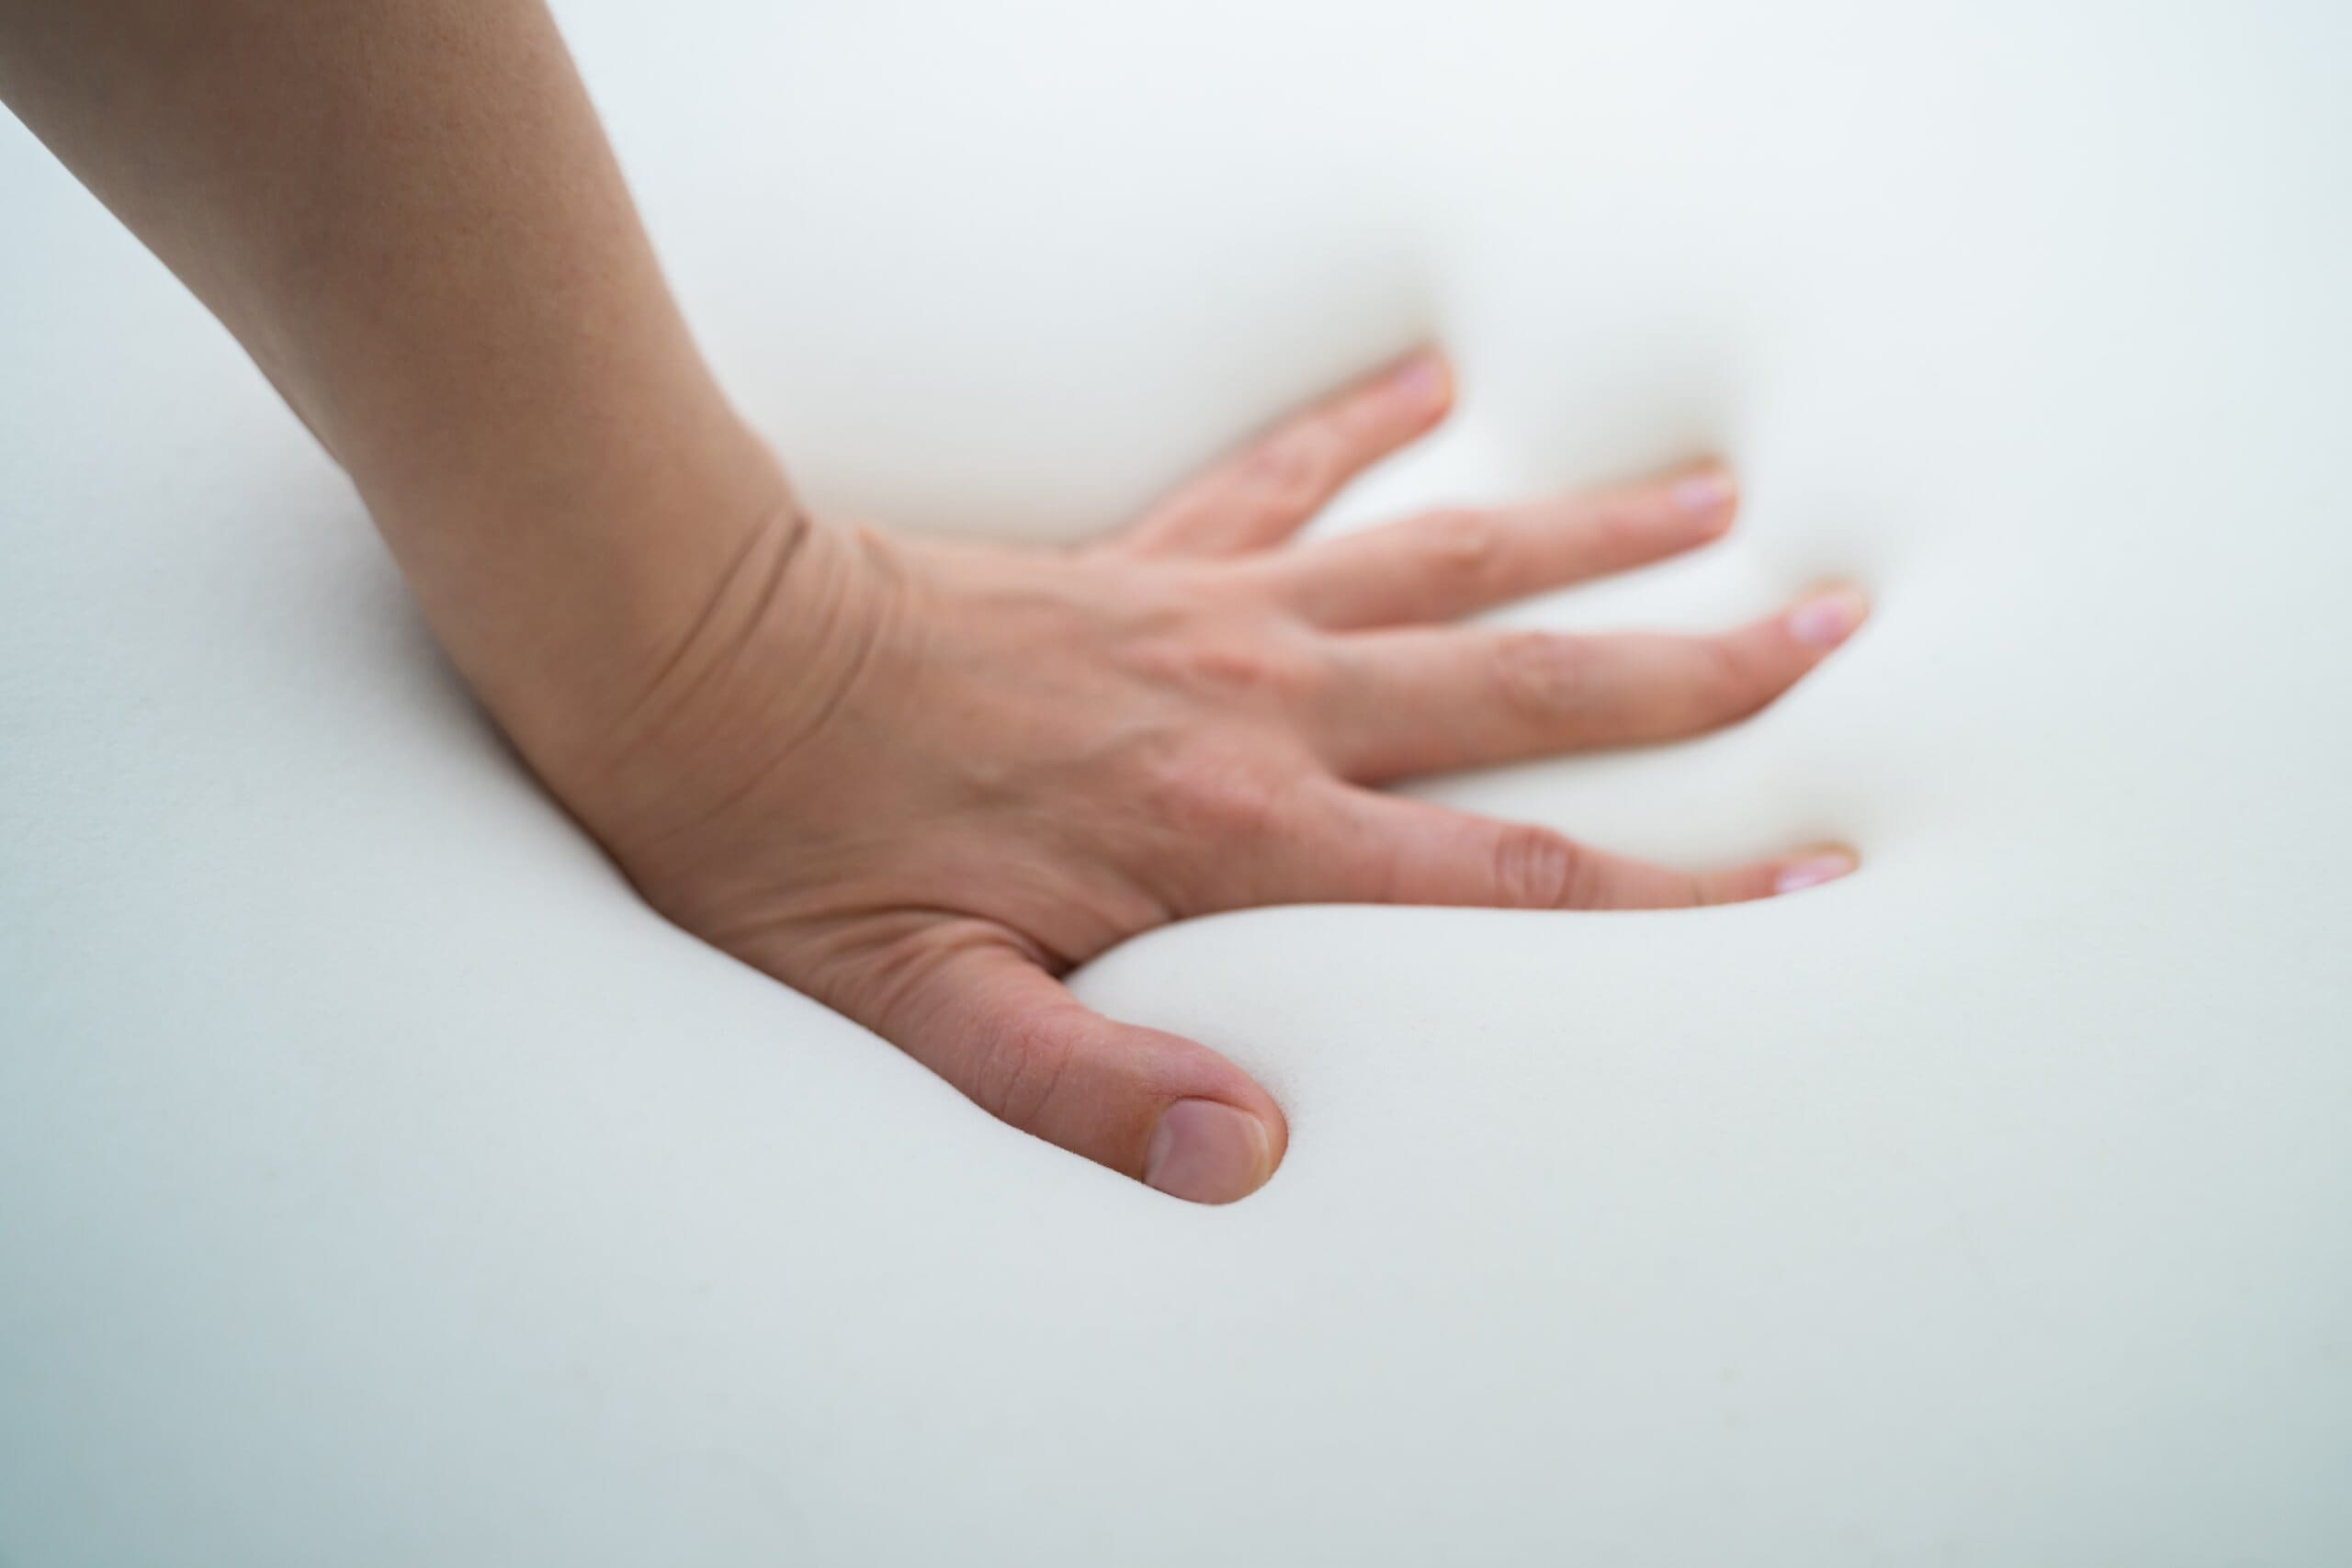 A hand pressing down onto a memory foam mattress, leaving an imprint.